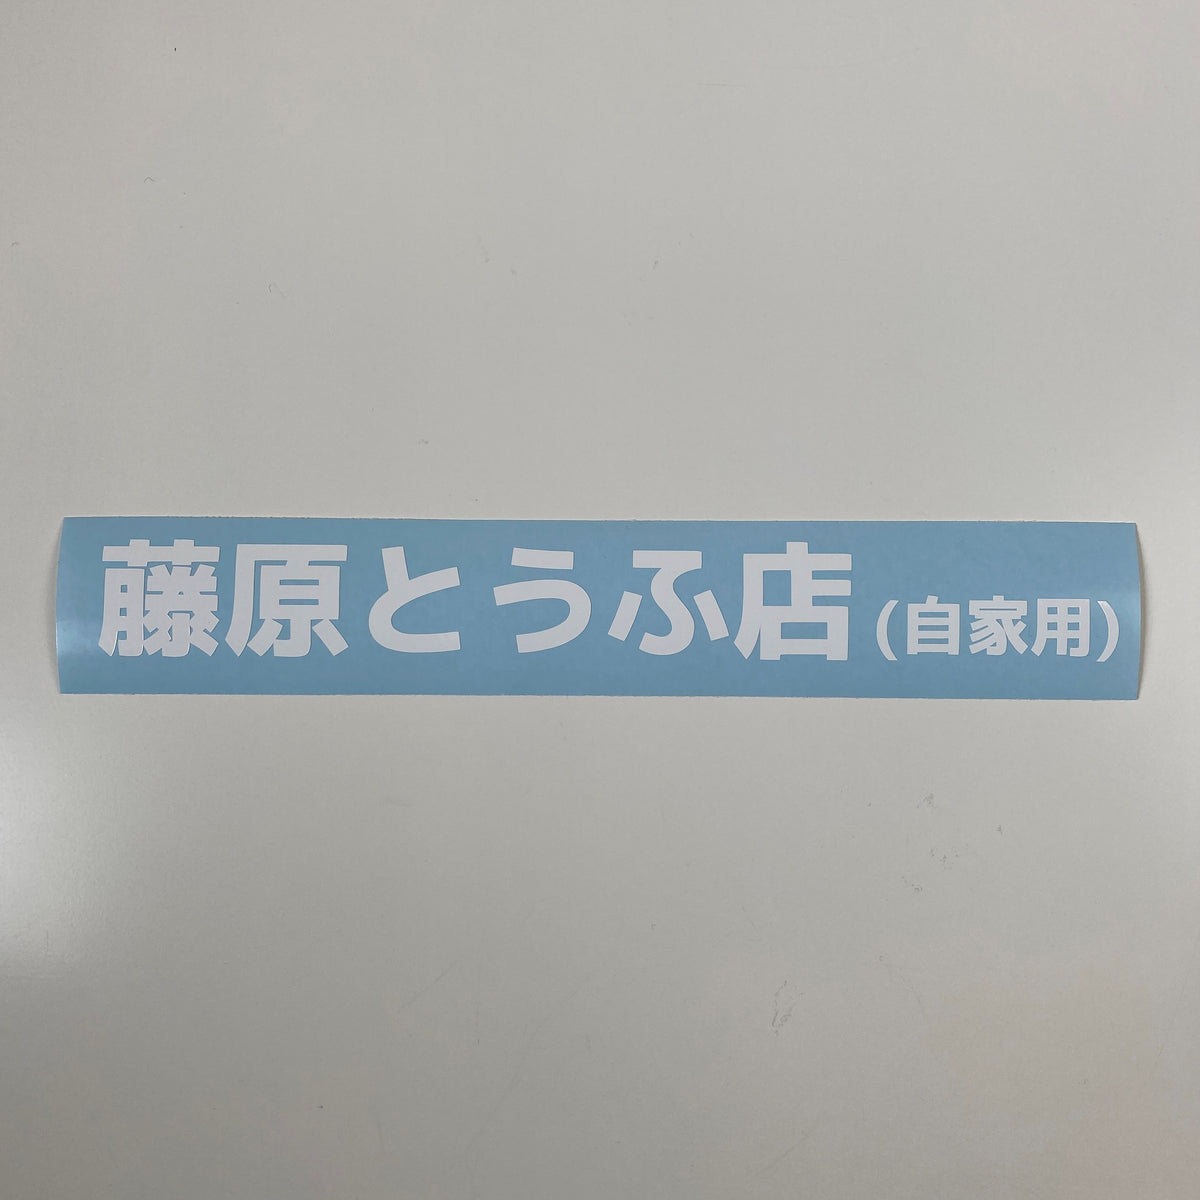 Fujiwara Tofu Shop Decal Sticker